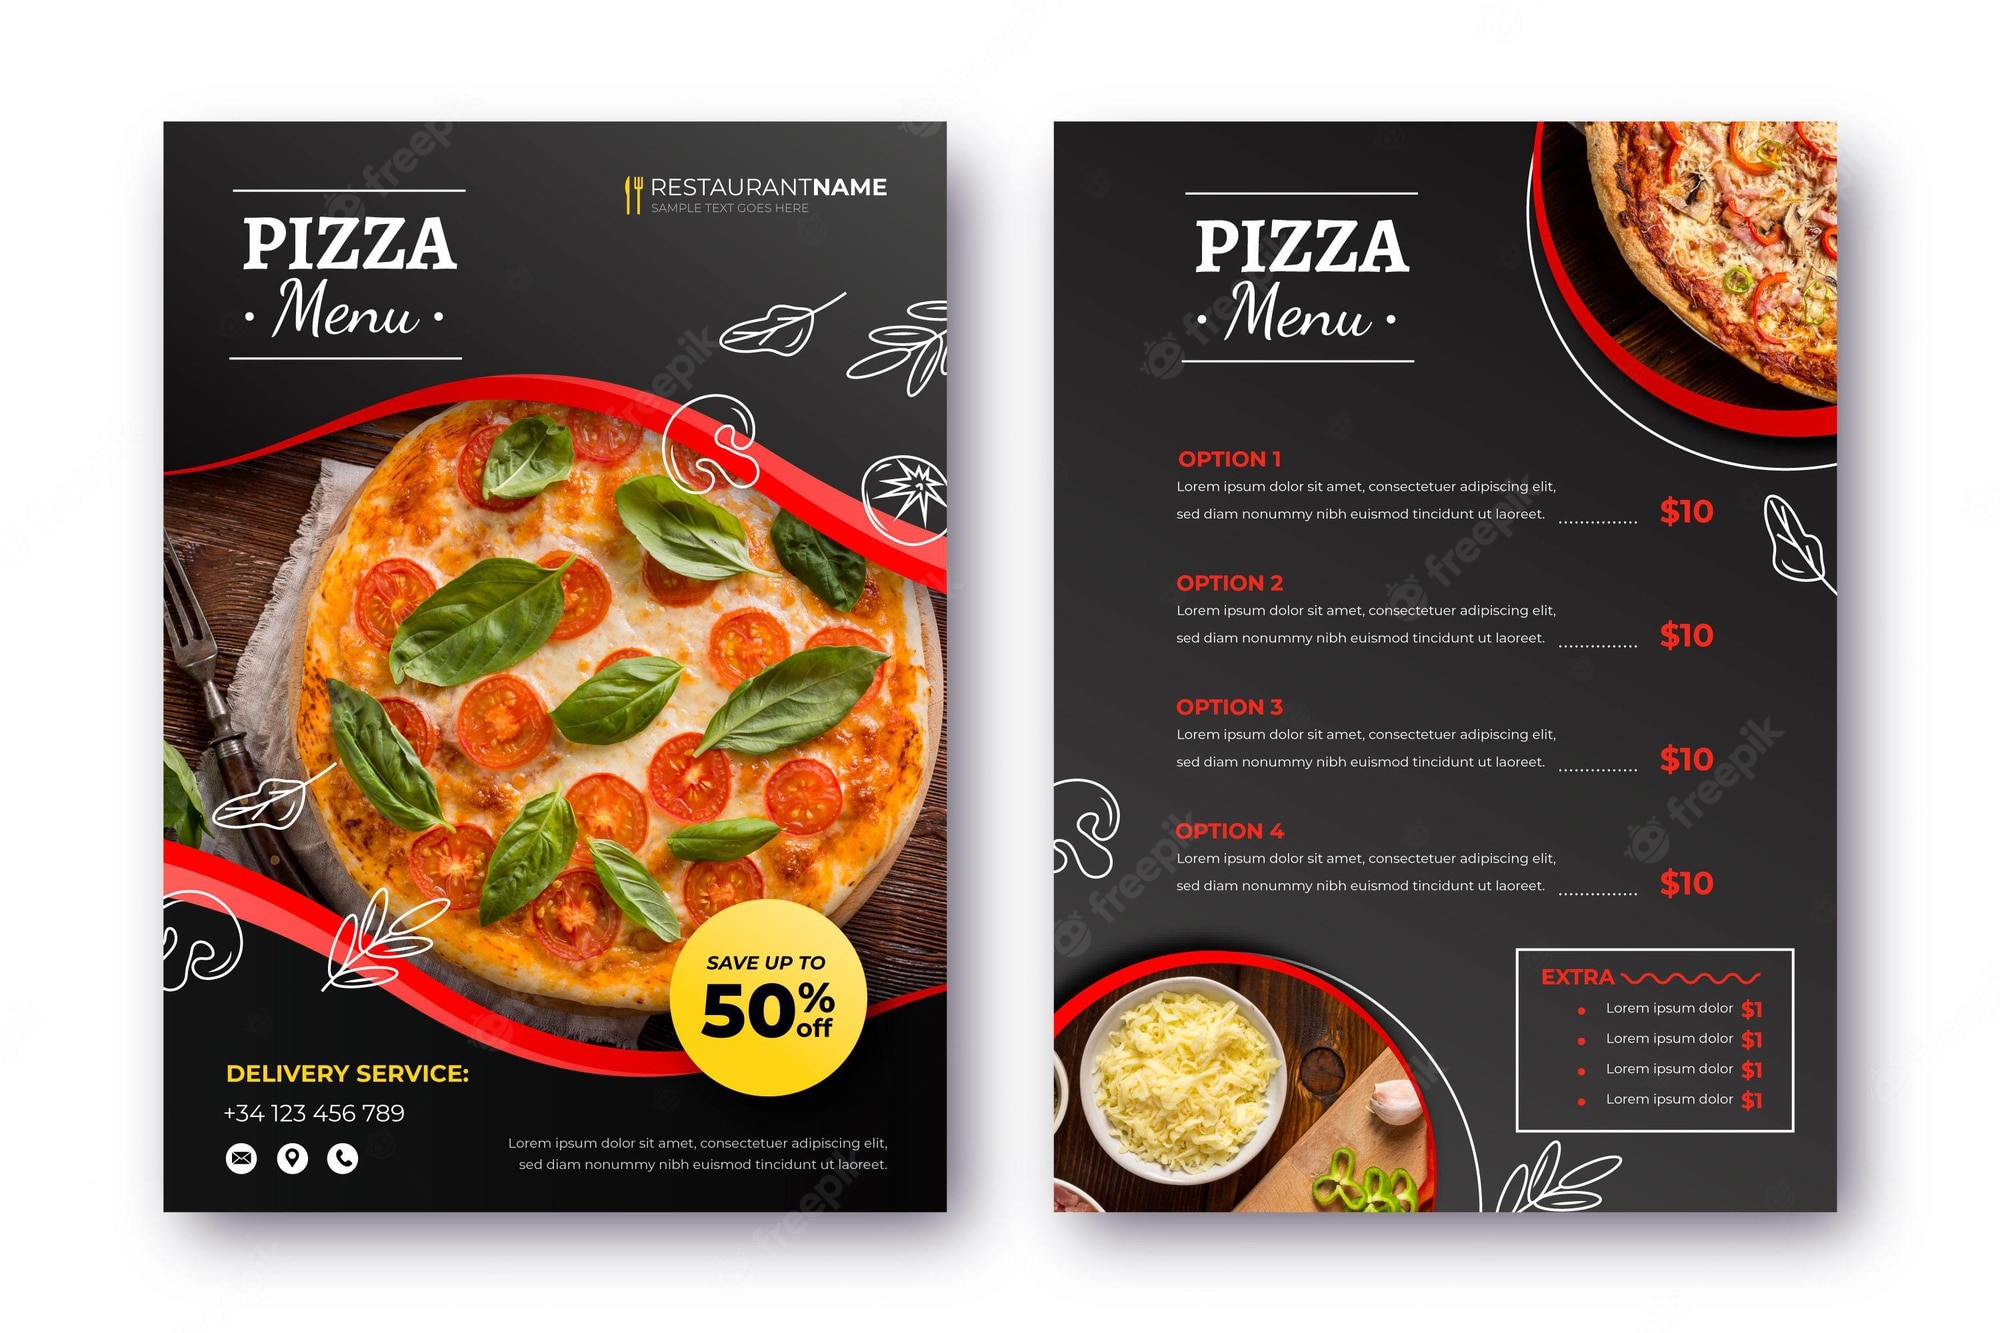 Free Vector | Pizza restaurant menu with photo - cardapio de pizza